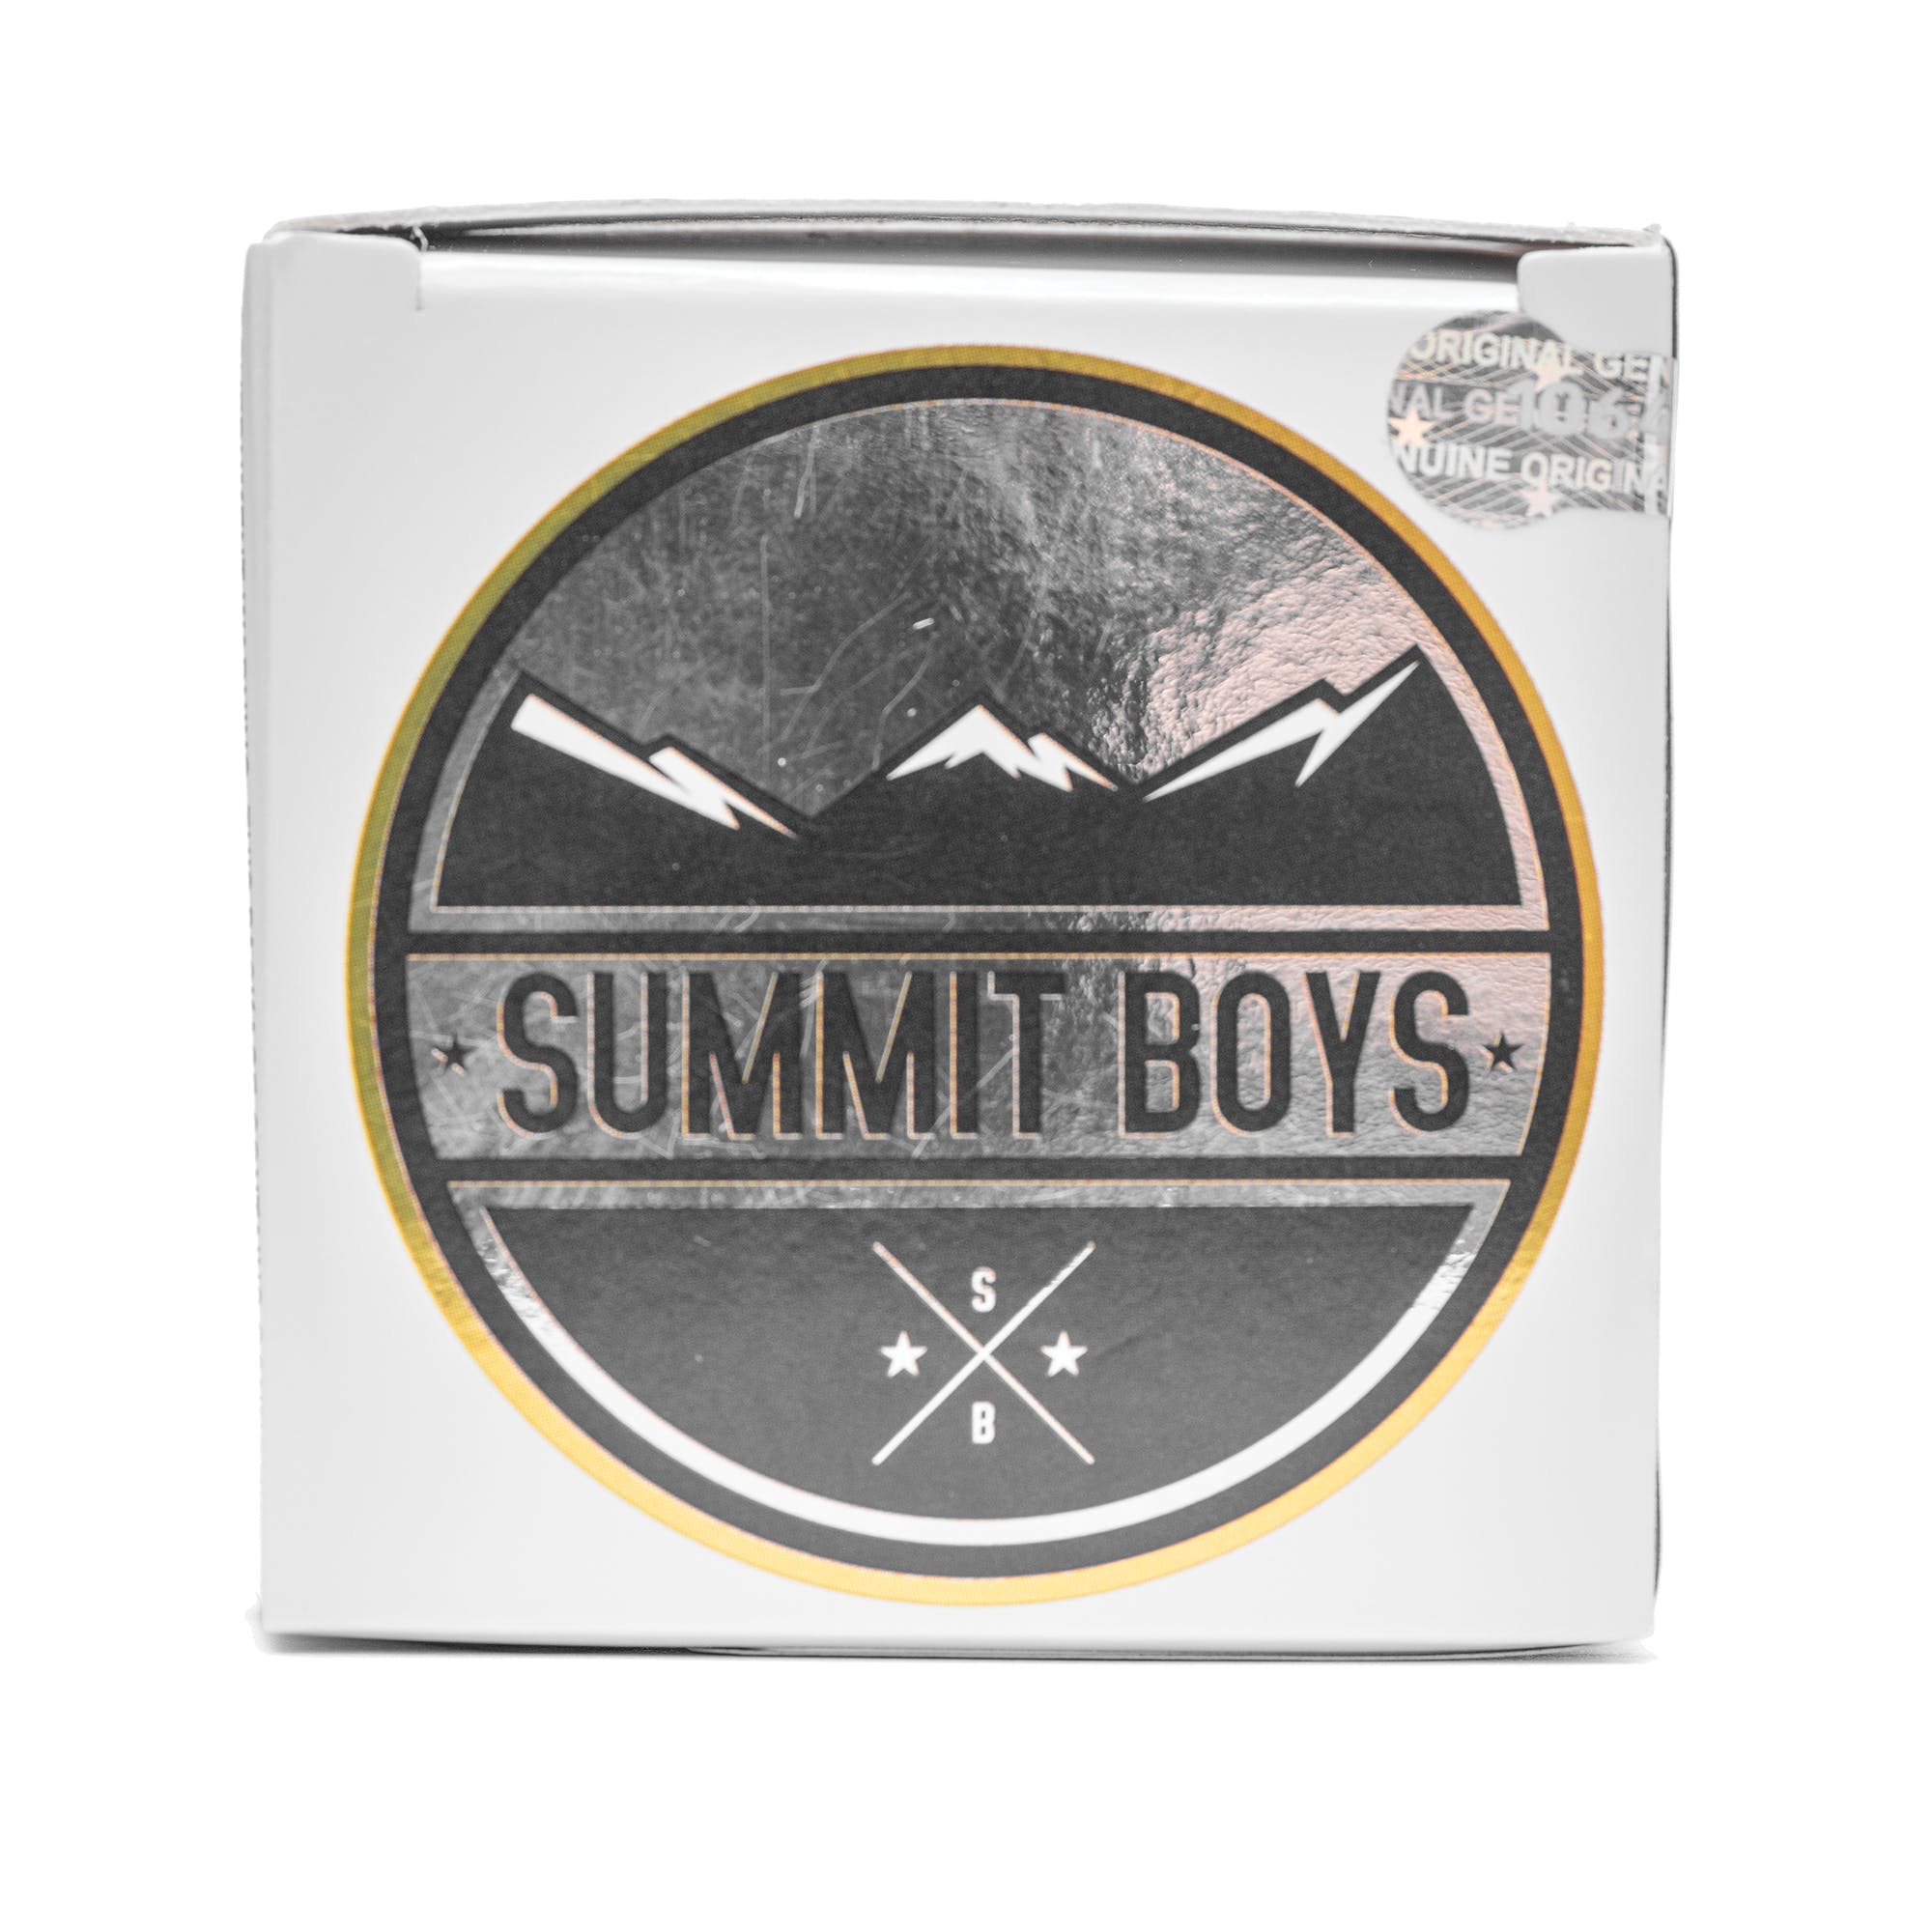 *Medical/Online(21+)* Fire OG Diamond Sauce By Summit Boys